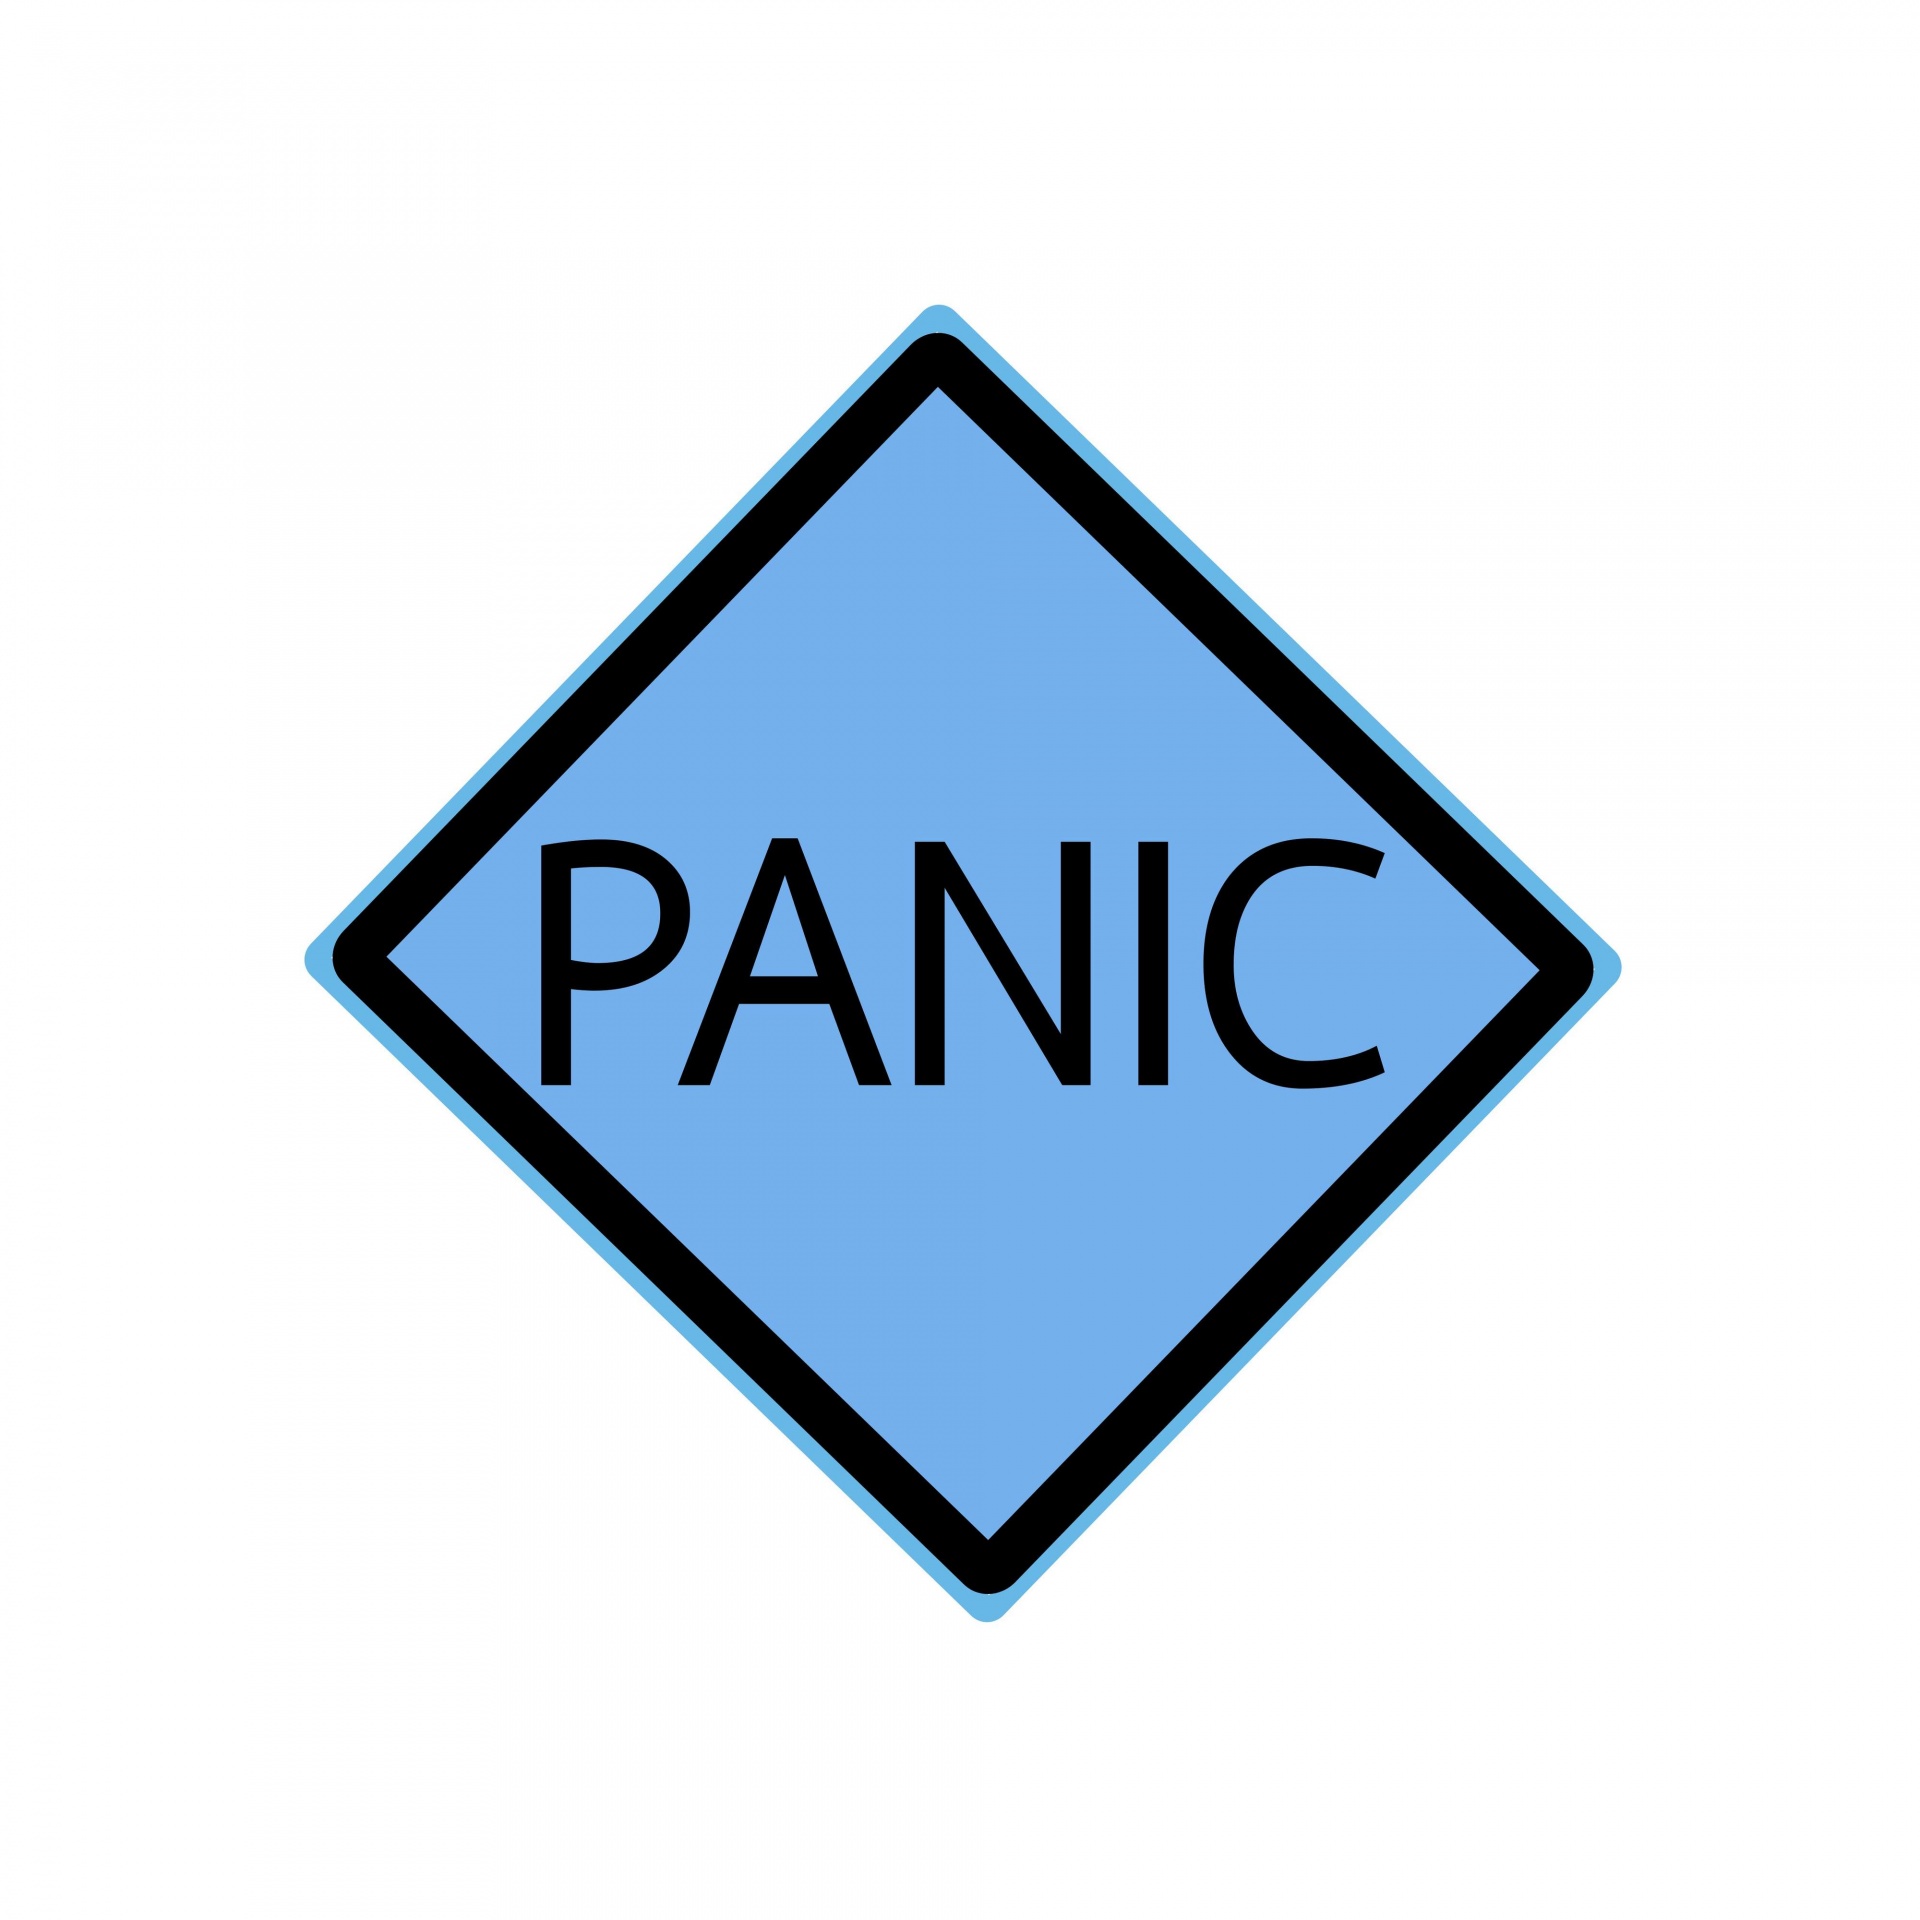 Panic Black Stamp Text On Blue